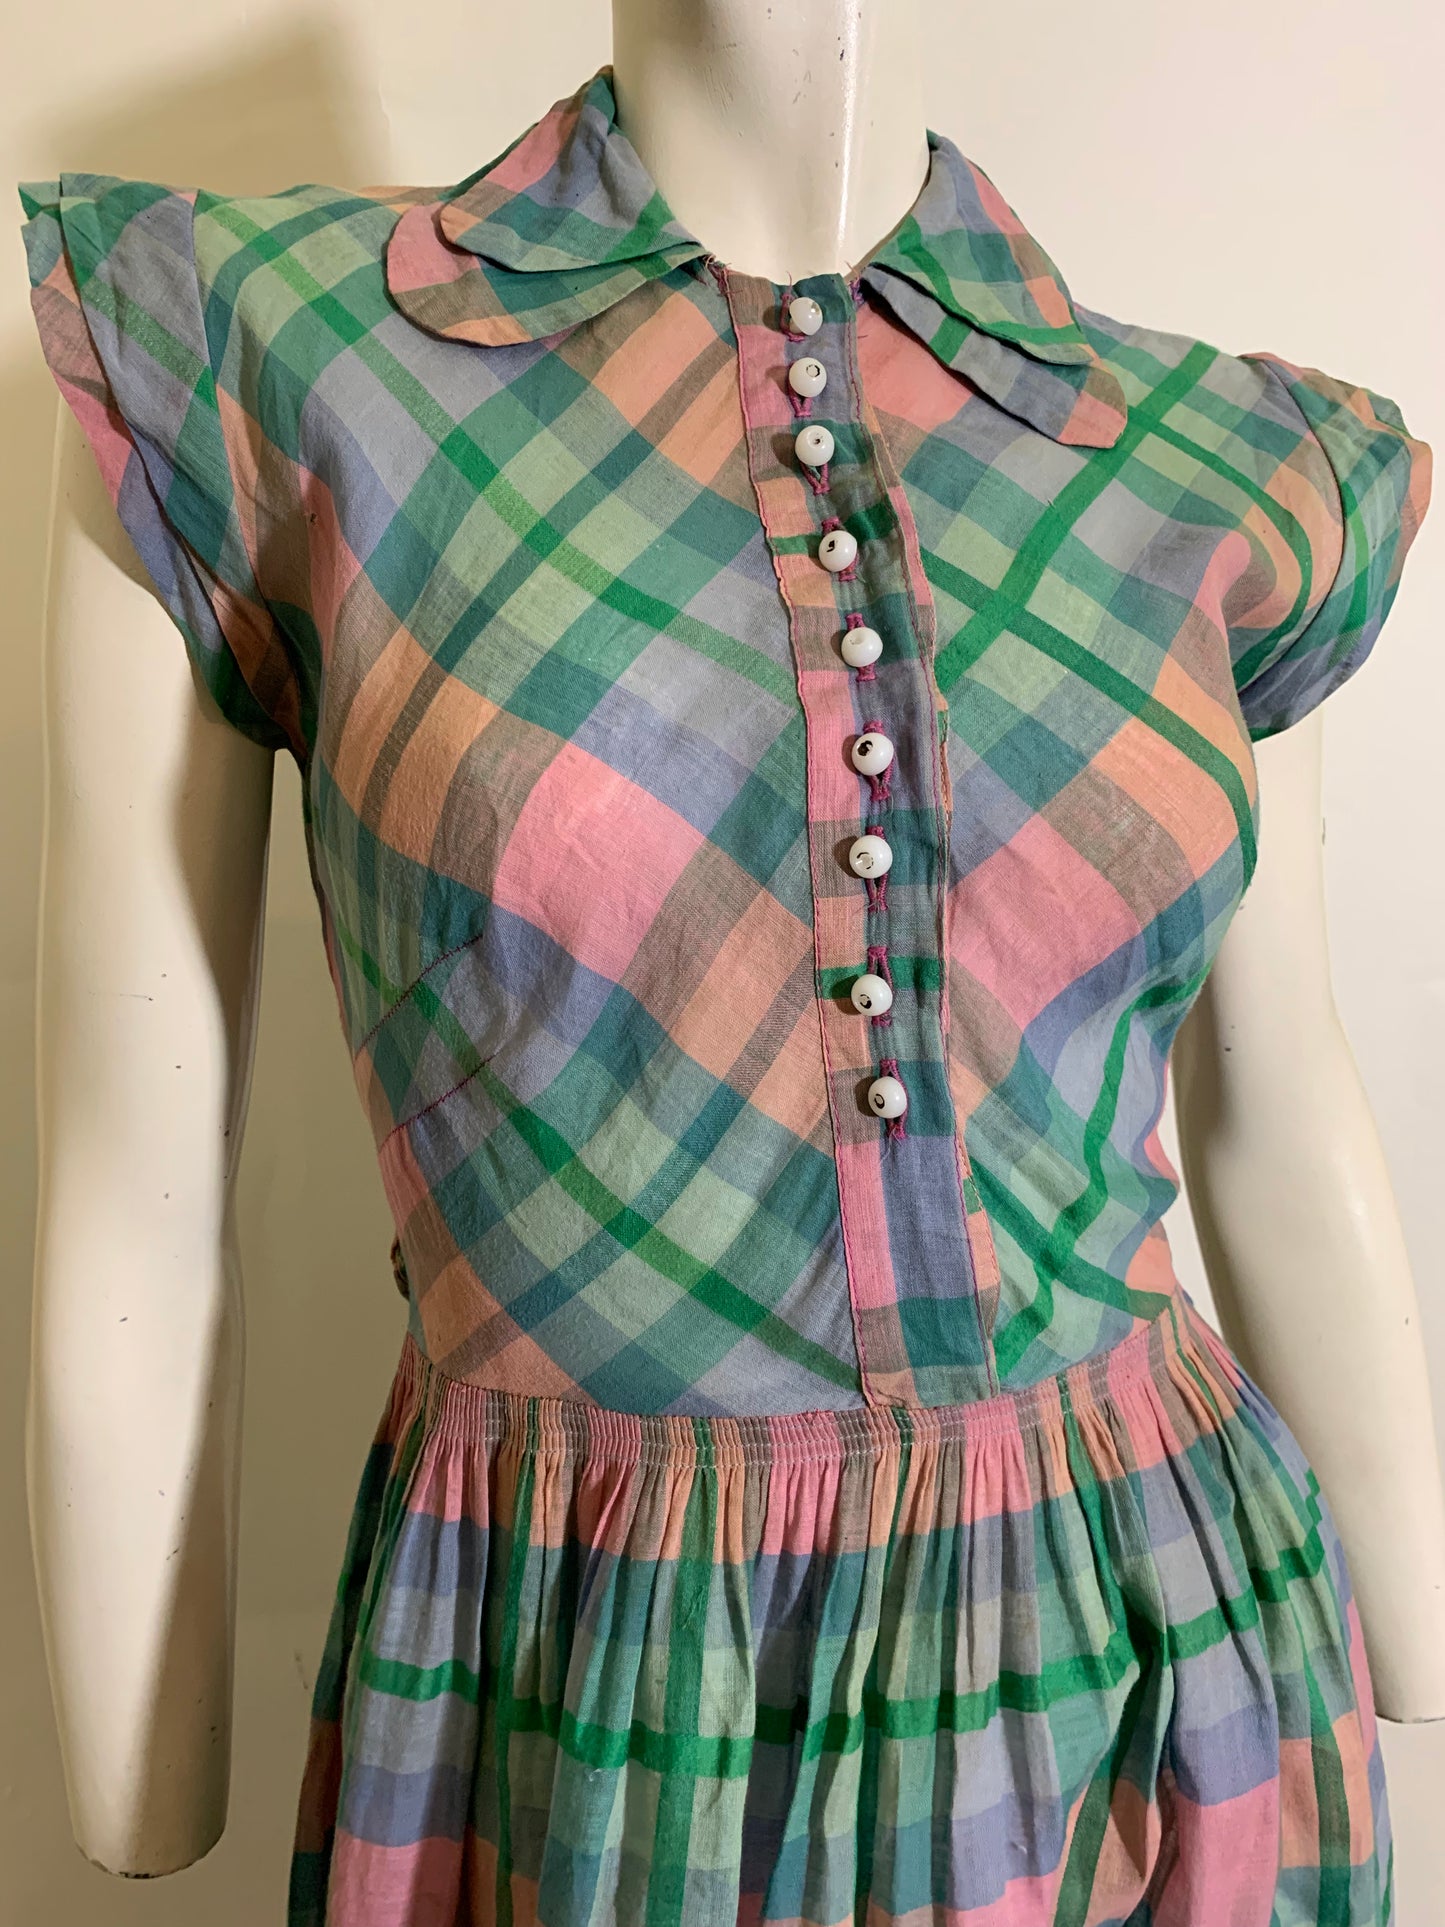 Darling Pastel Plaid Voile Cotton Day Dress circa 1940s